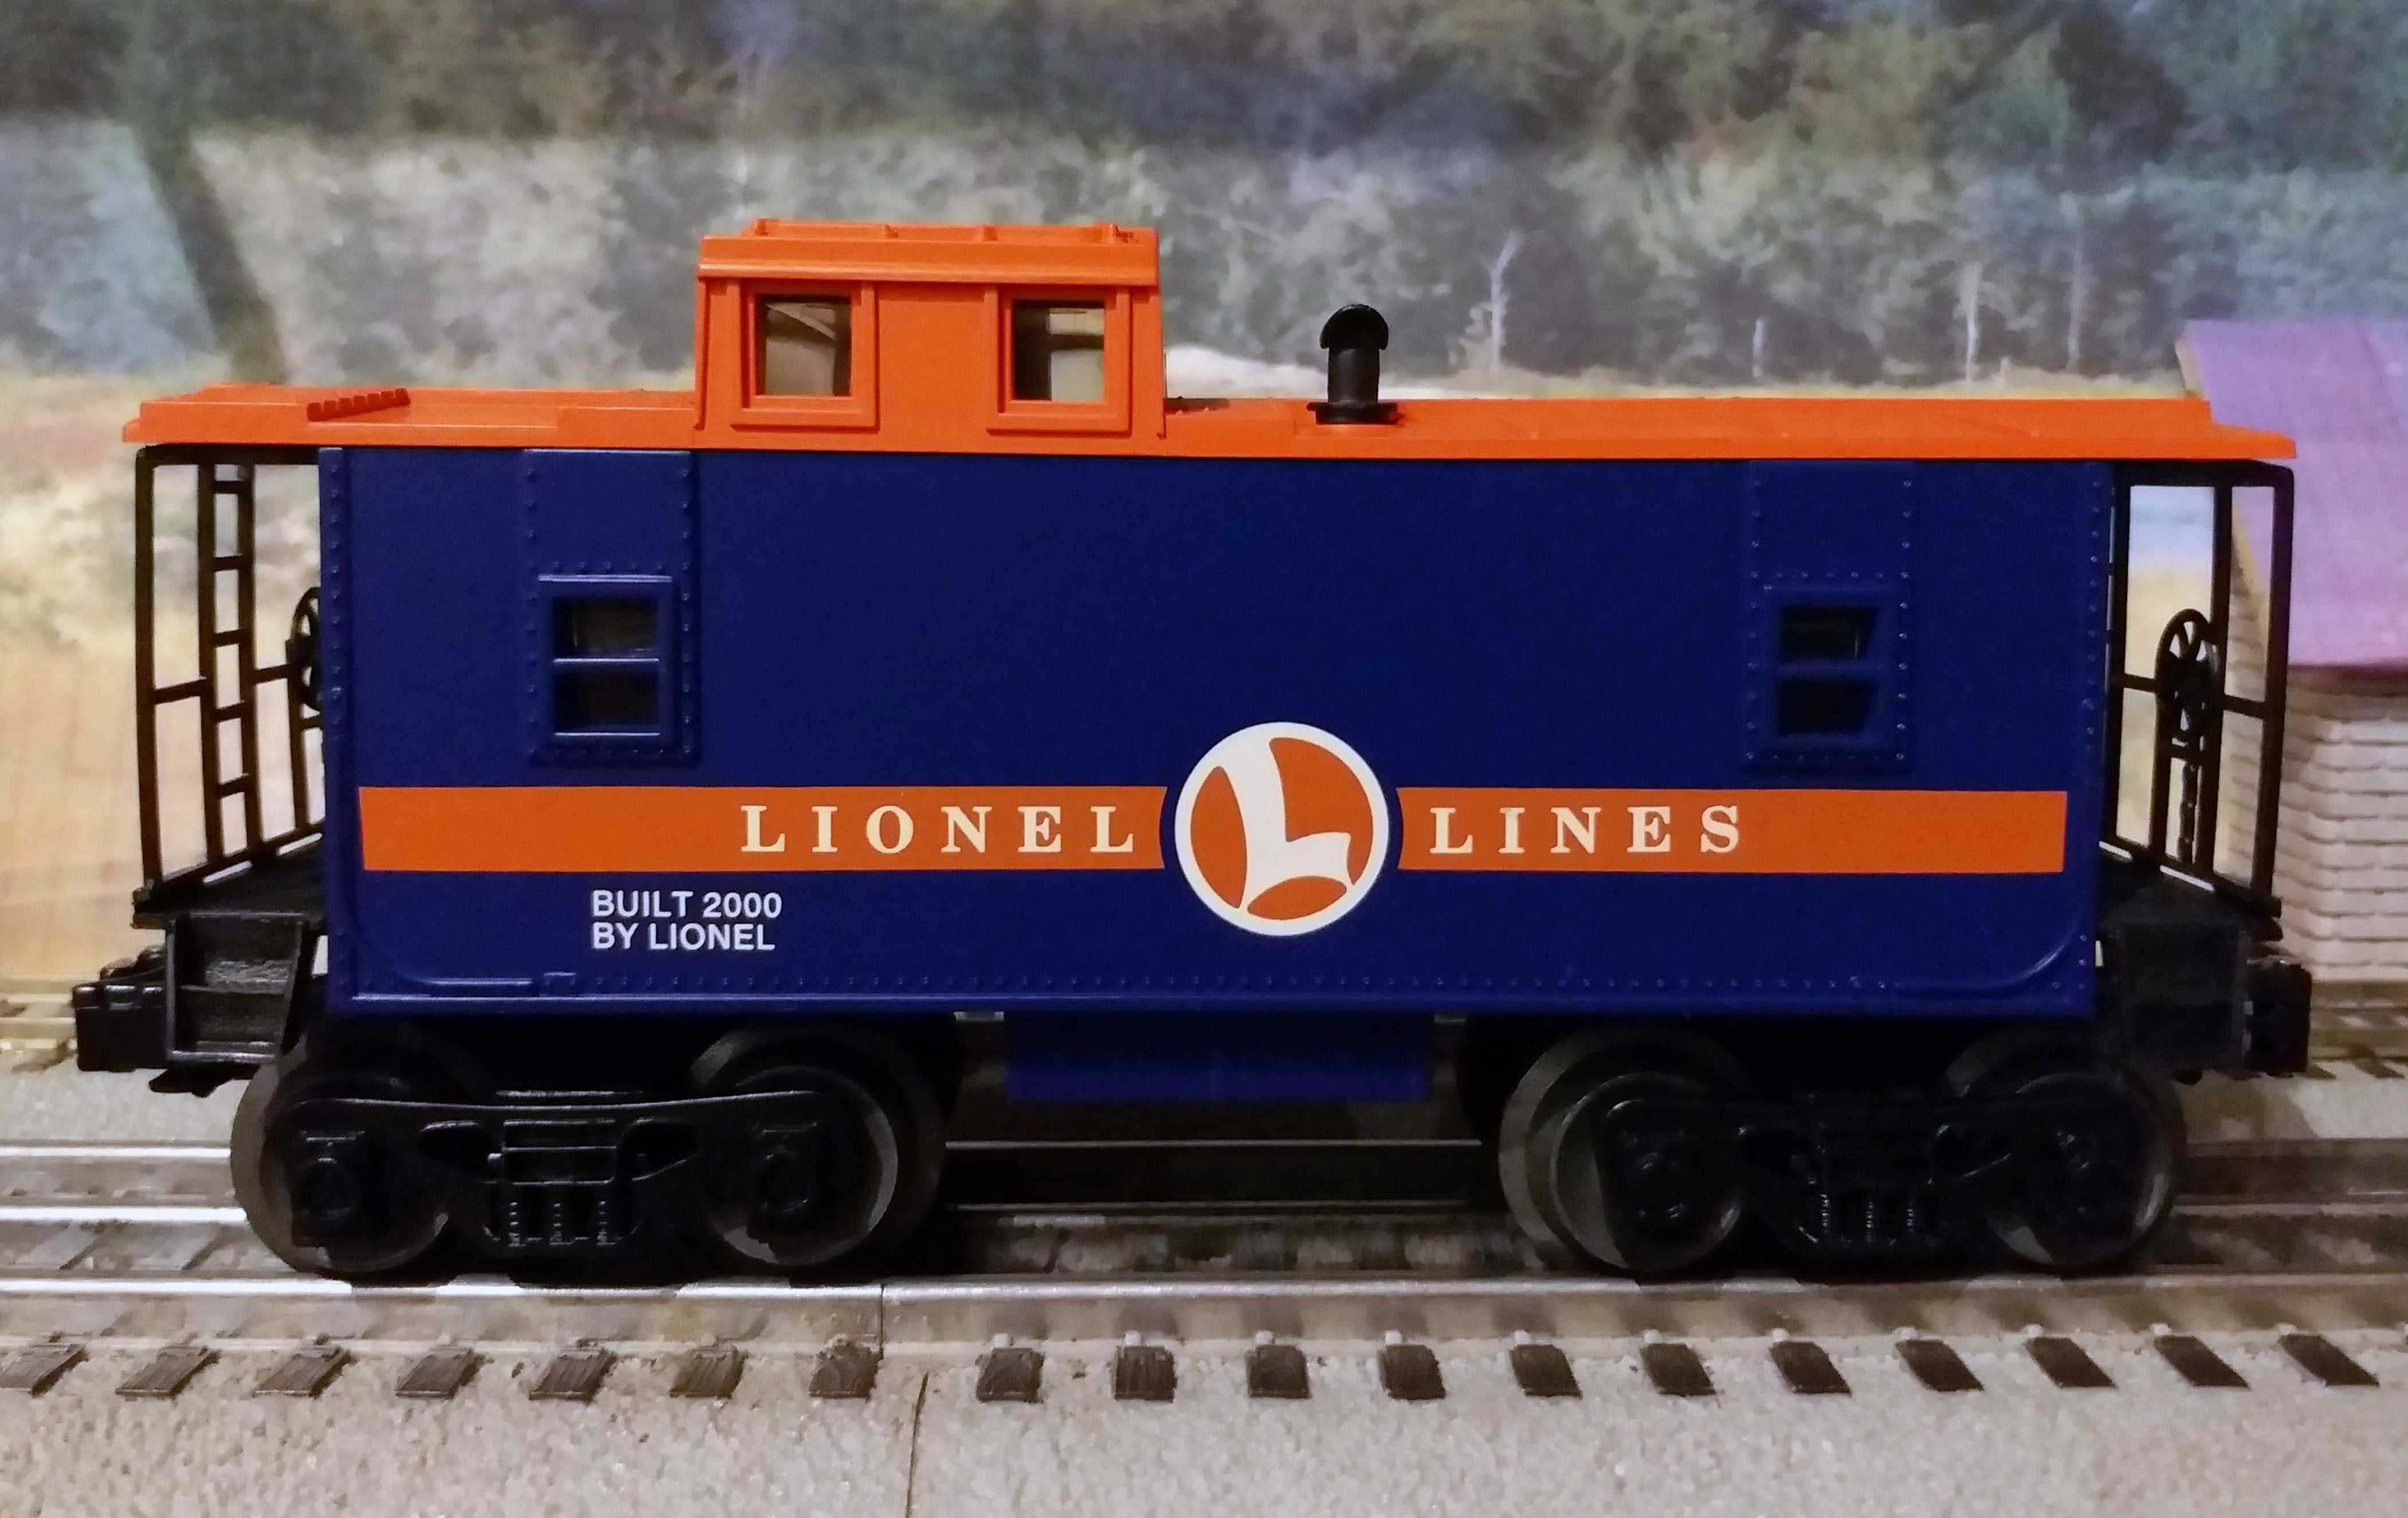 O Lionel CBS SQ. WDW - Lionel Lines